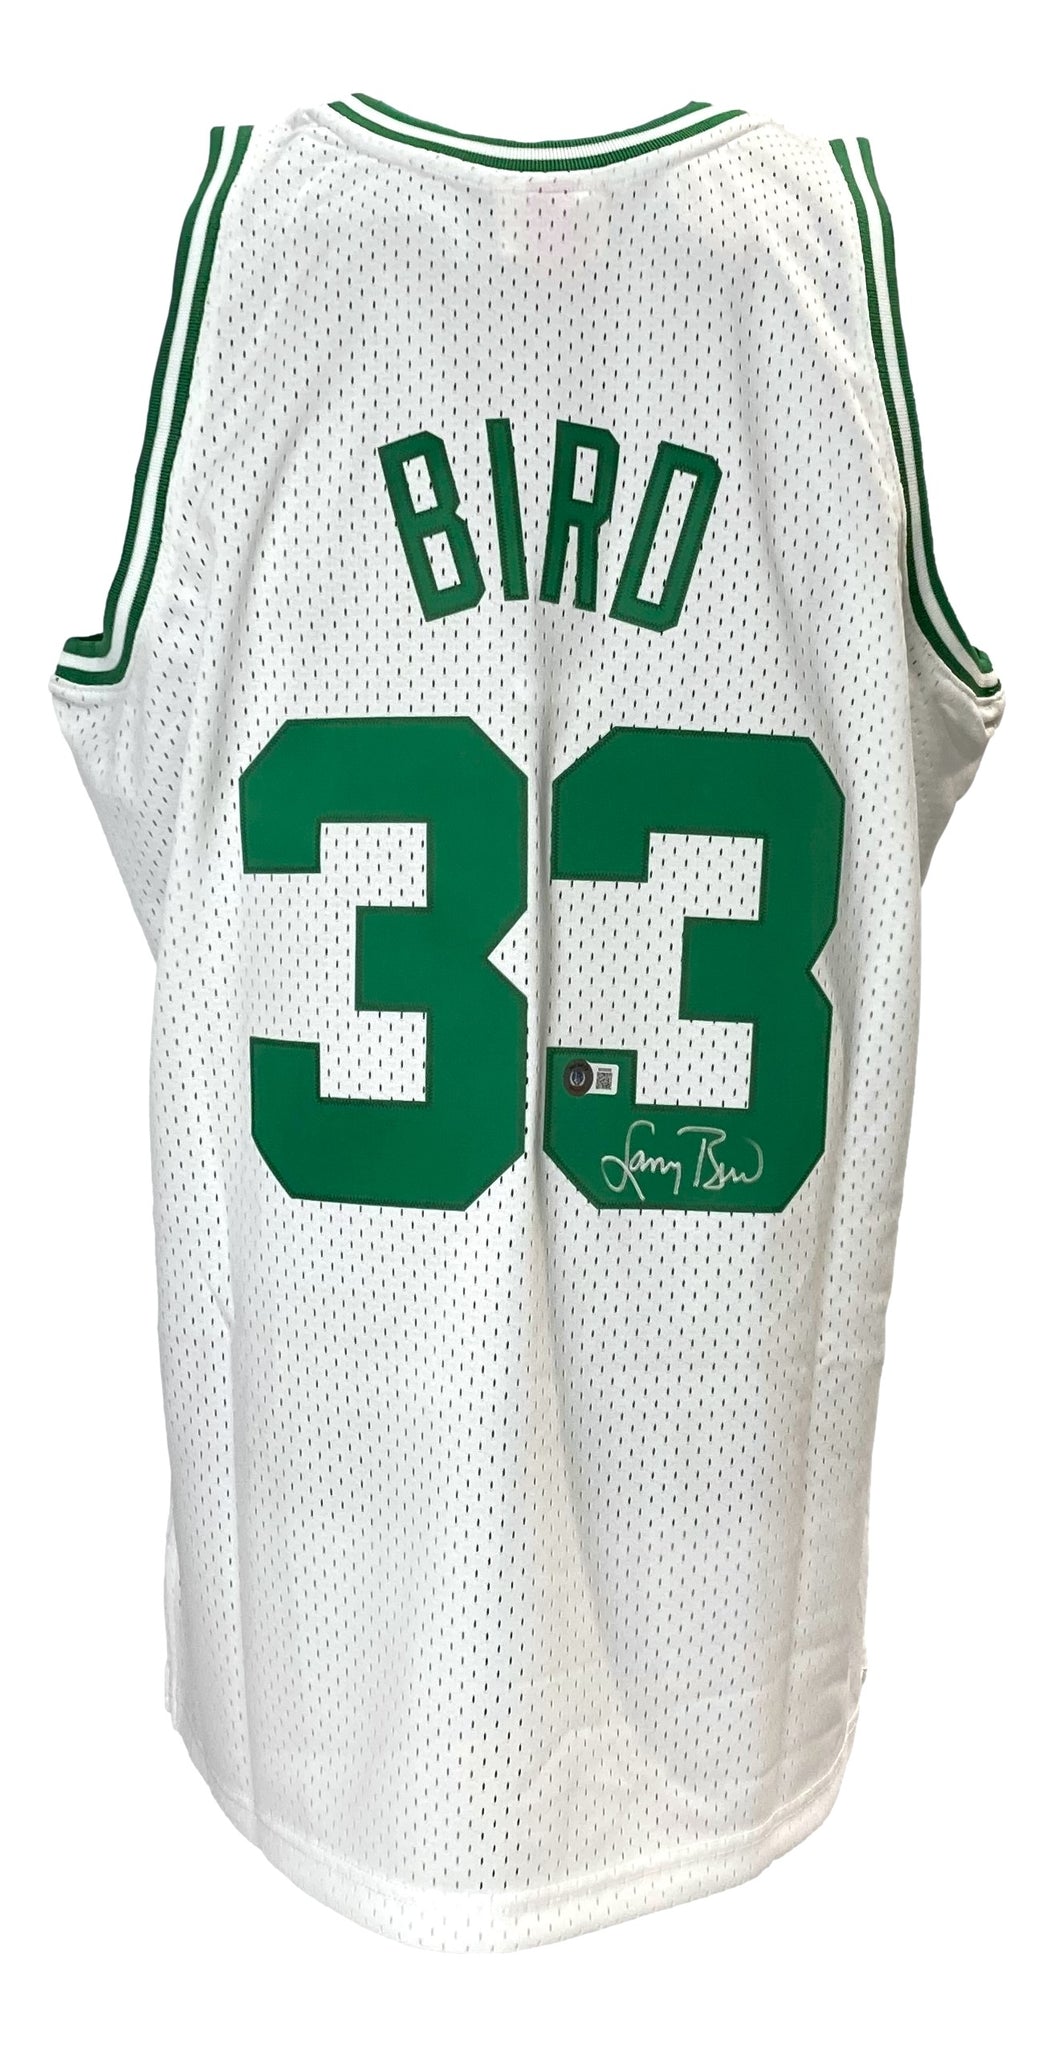 Larry Bird Autographed Green Boston Celtics Jersey  